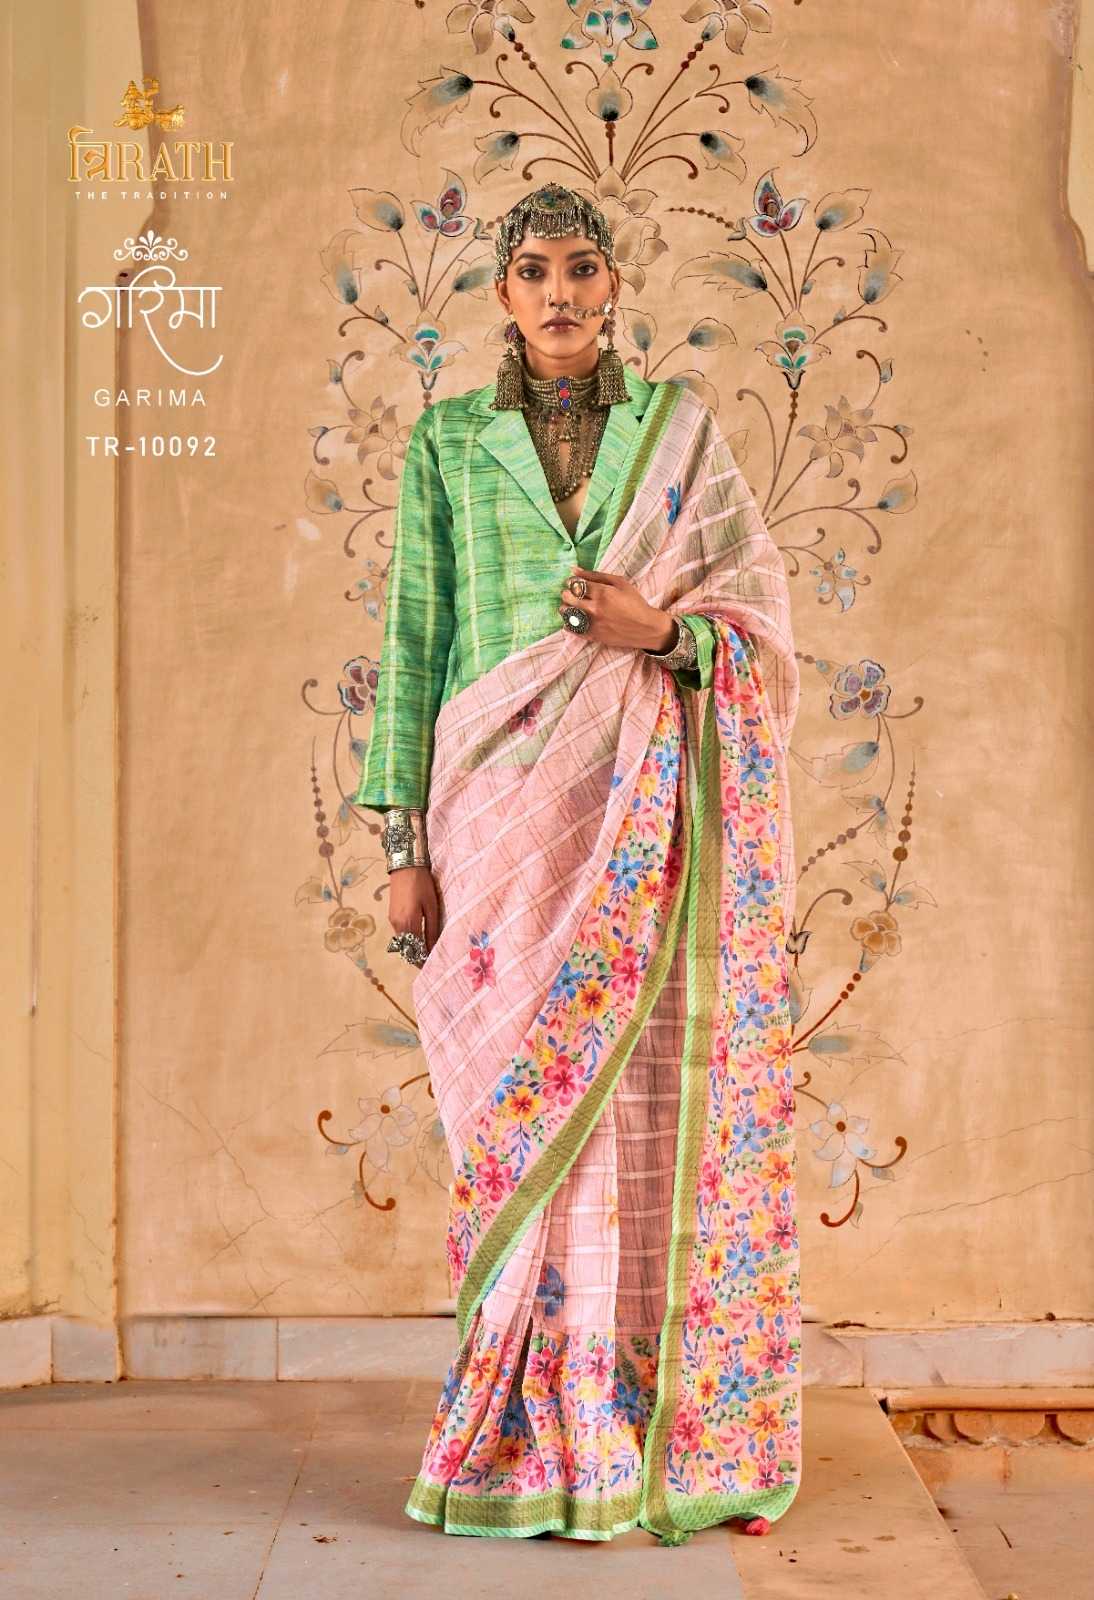 trirath garima 10088-10094 linen traditional wear floral print beautiful sarees